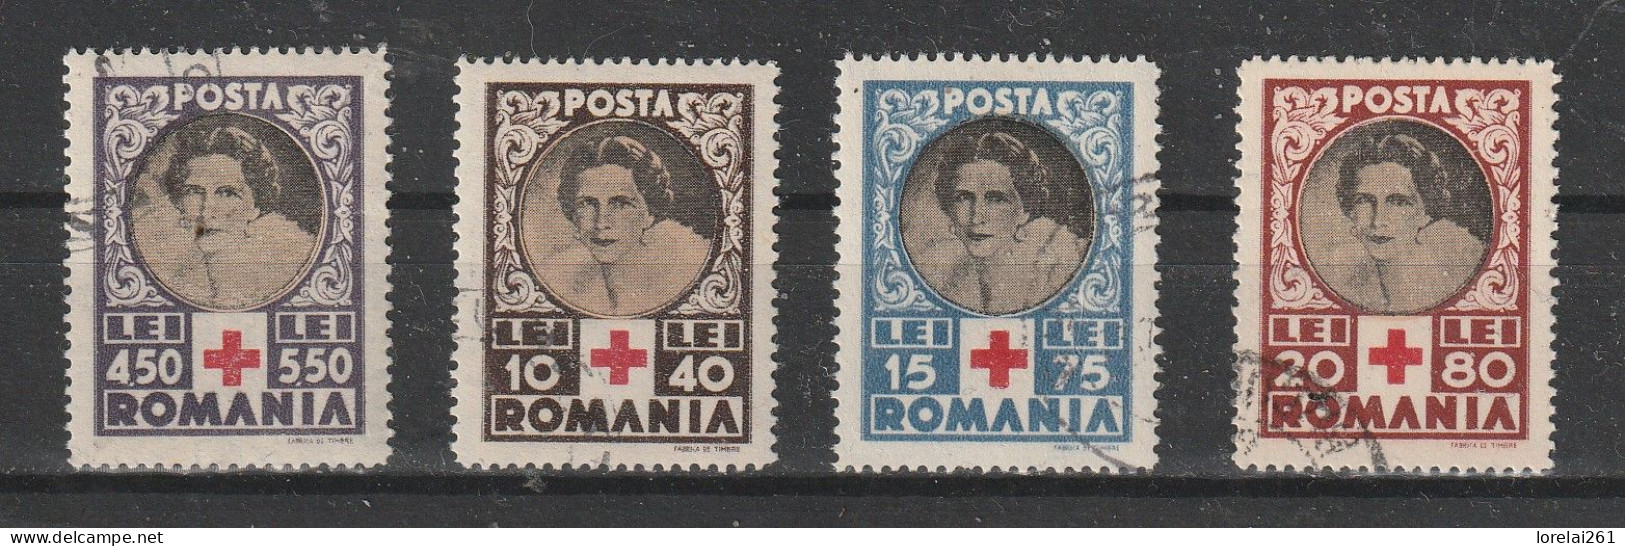 1945 - Croix Rouge/Reine Elena Mi No 827/830 - Usati